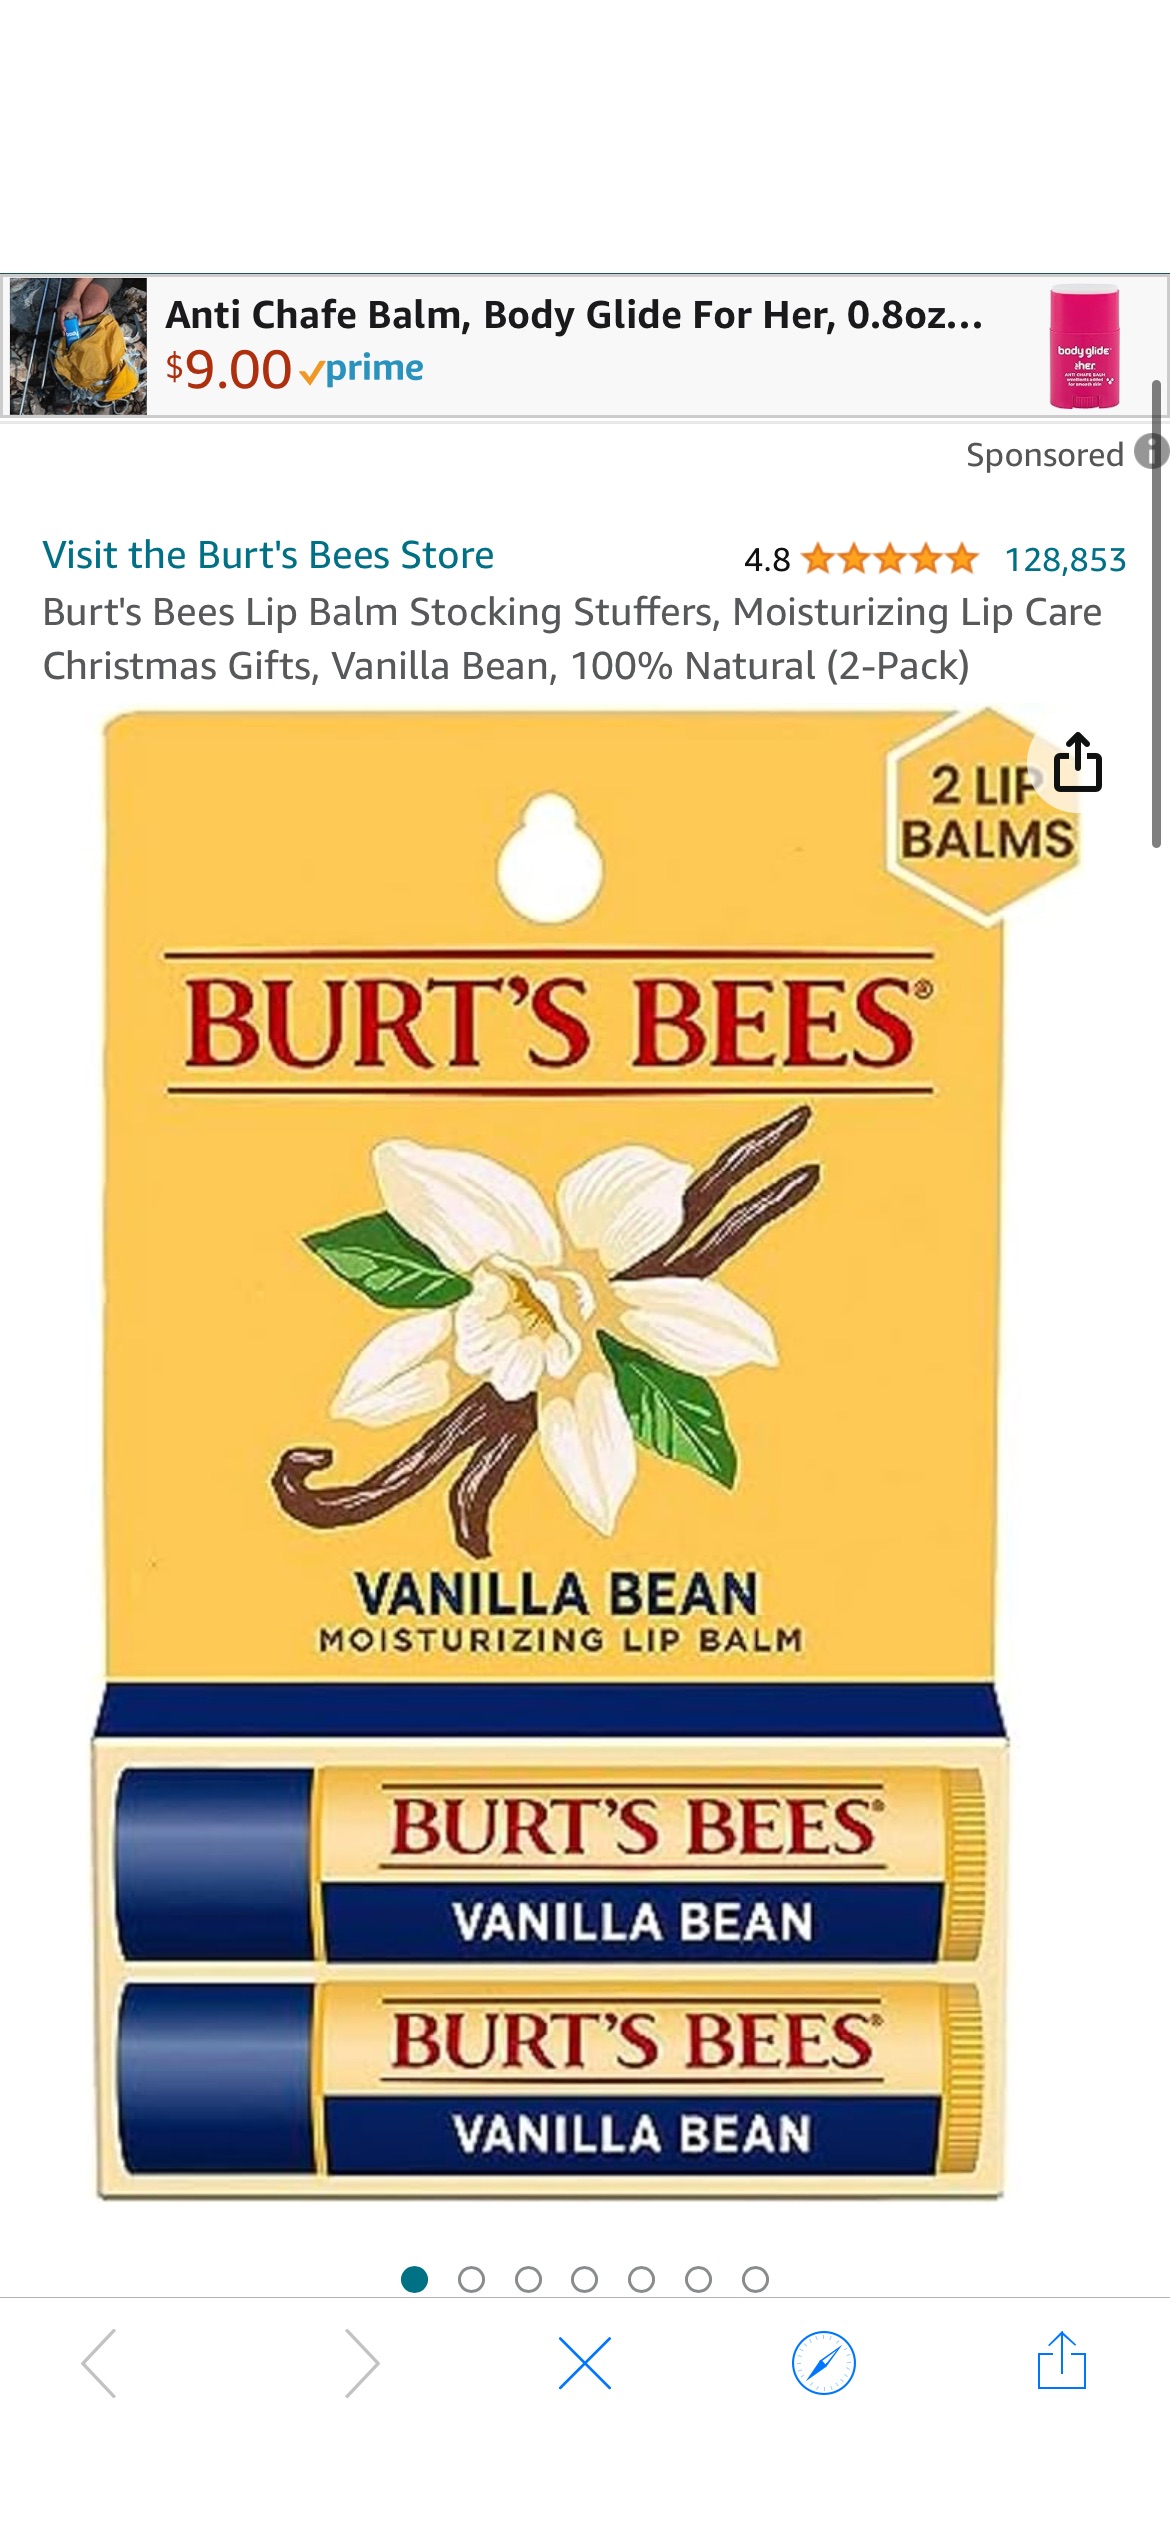 Amazon.com : Burt's Bees Lip Balm Stocking Stuffers, Moisturizing Lip Care Christmas Gifts, Vanilla Bean, 100% Natural (2-Pack) : Beauty & Personal Care